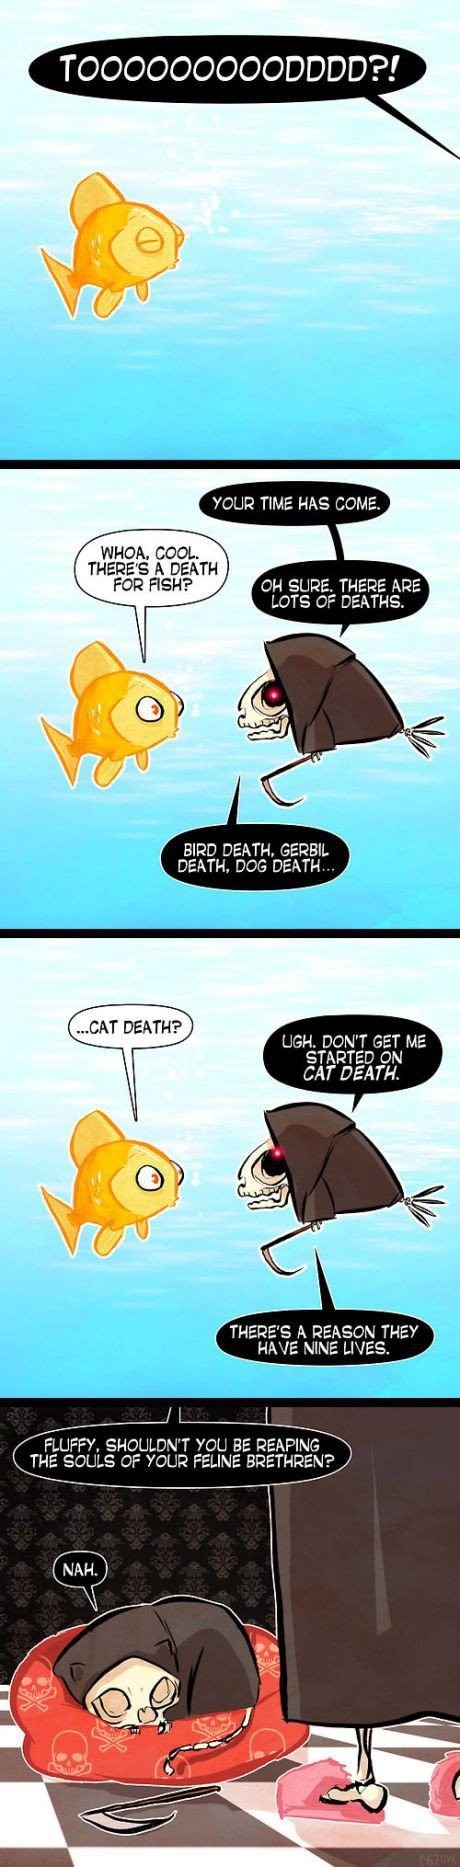 Cat Death - meme